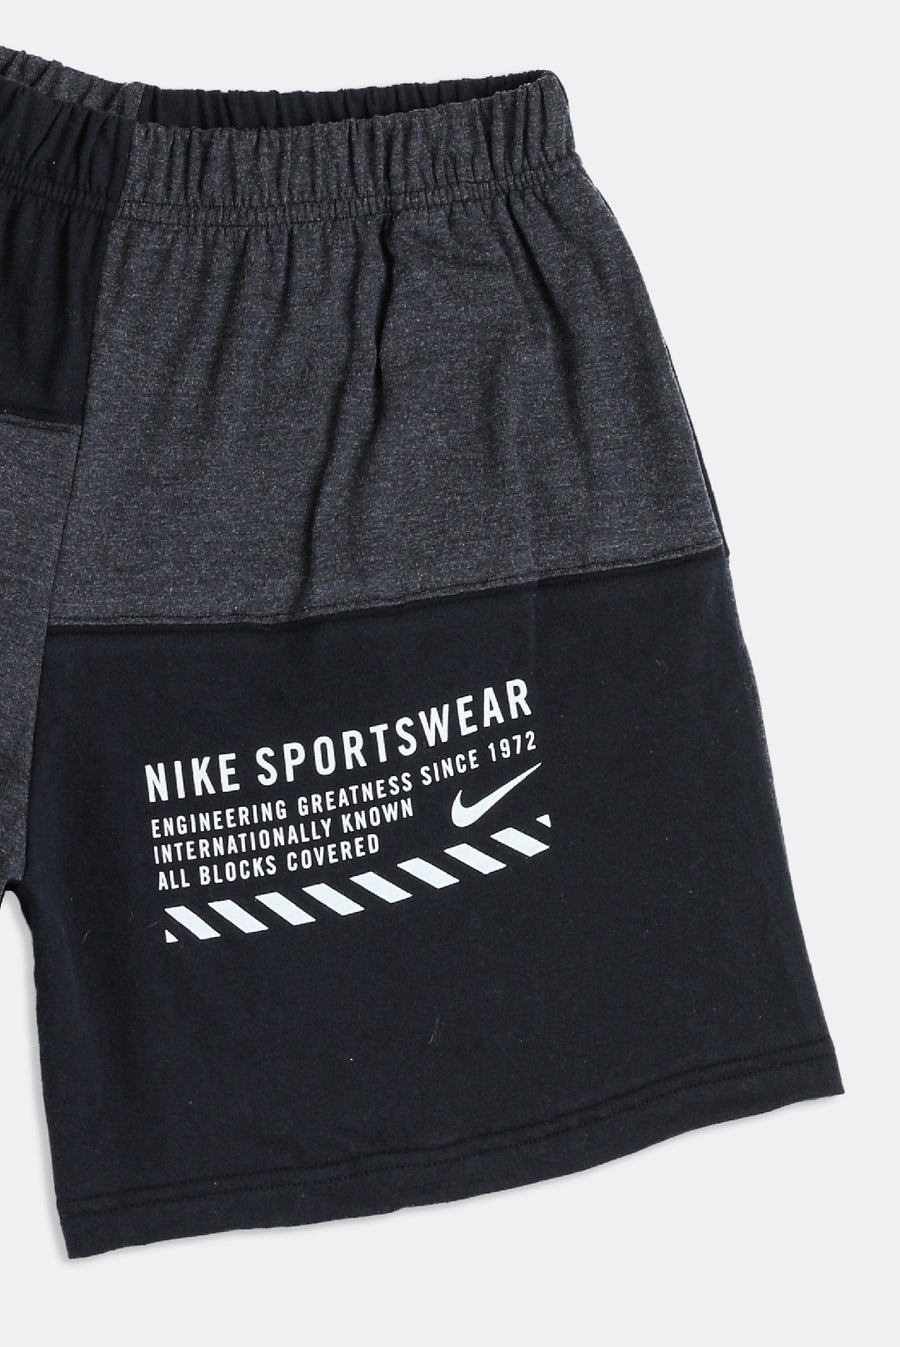 Unisex Rework Nike Patchwork Tee Shorts - M